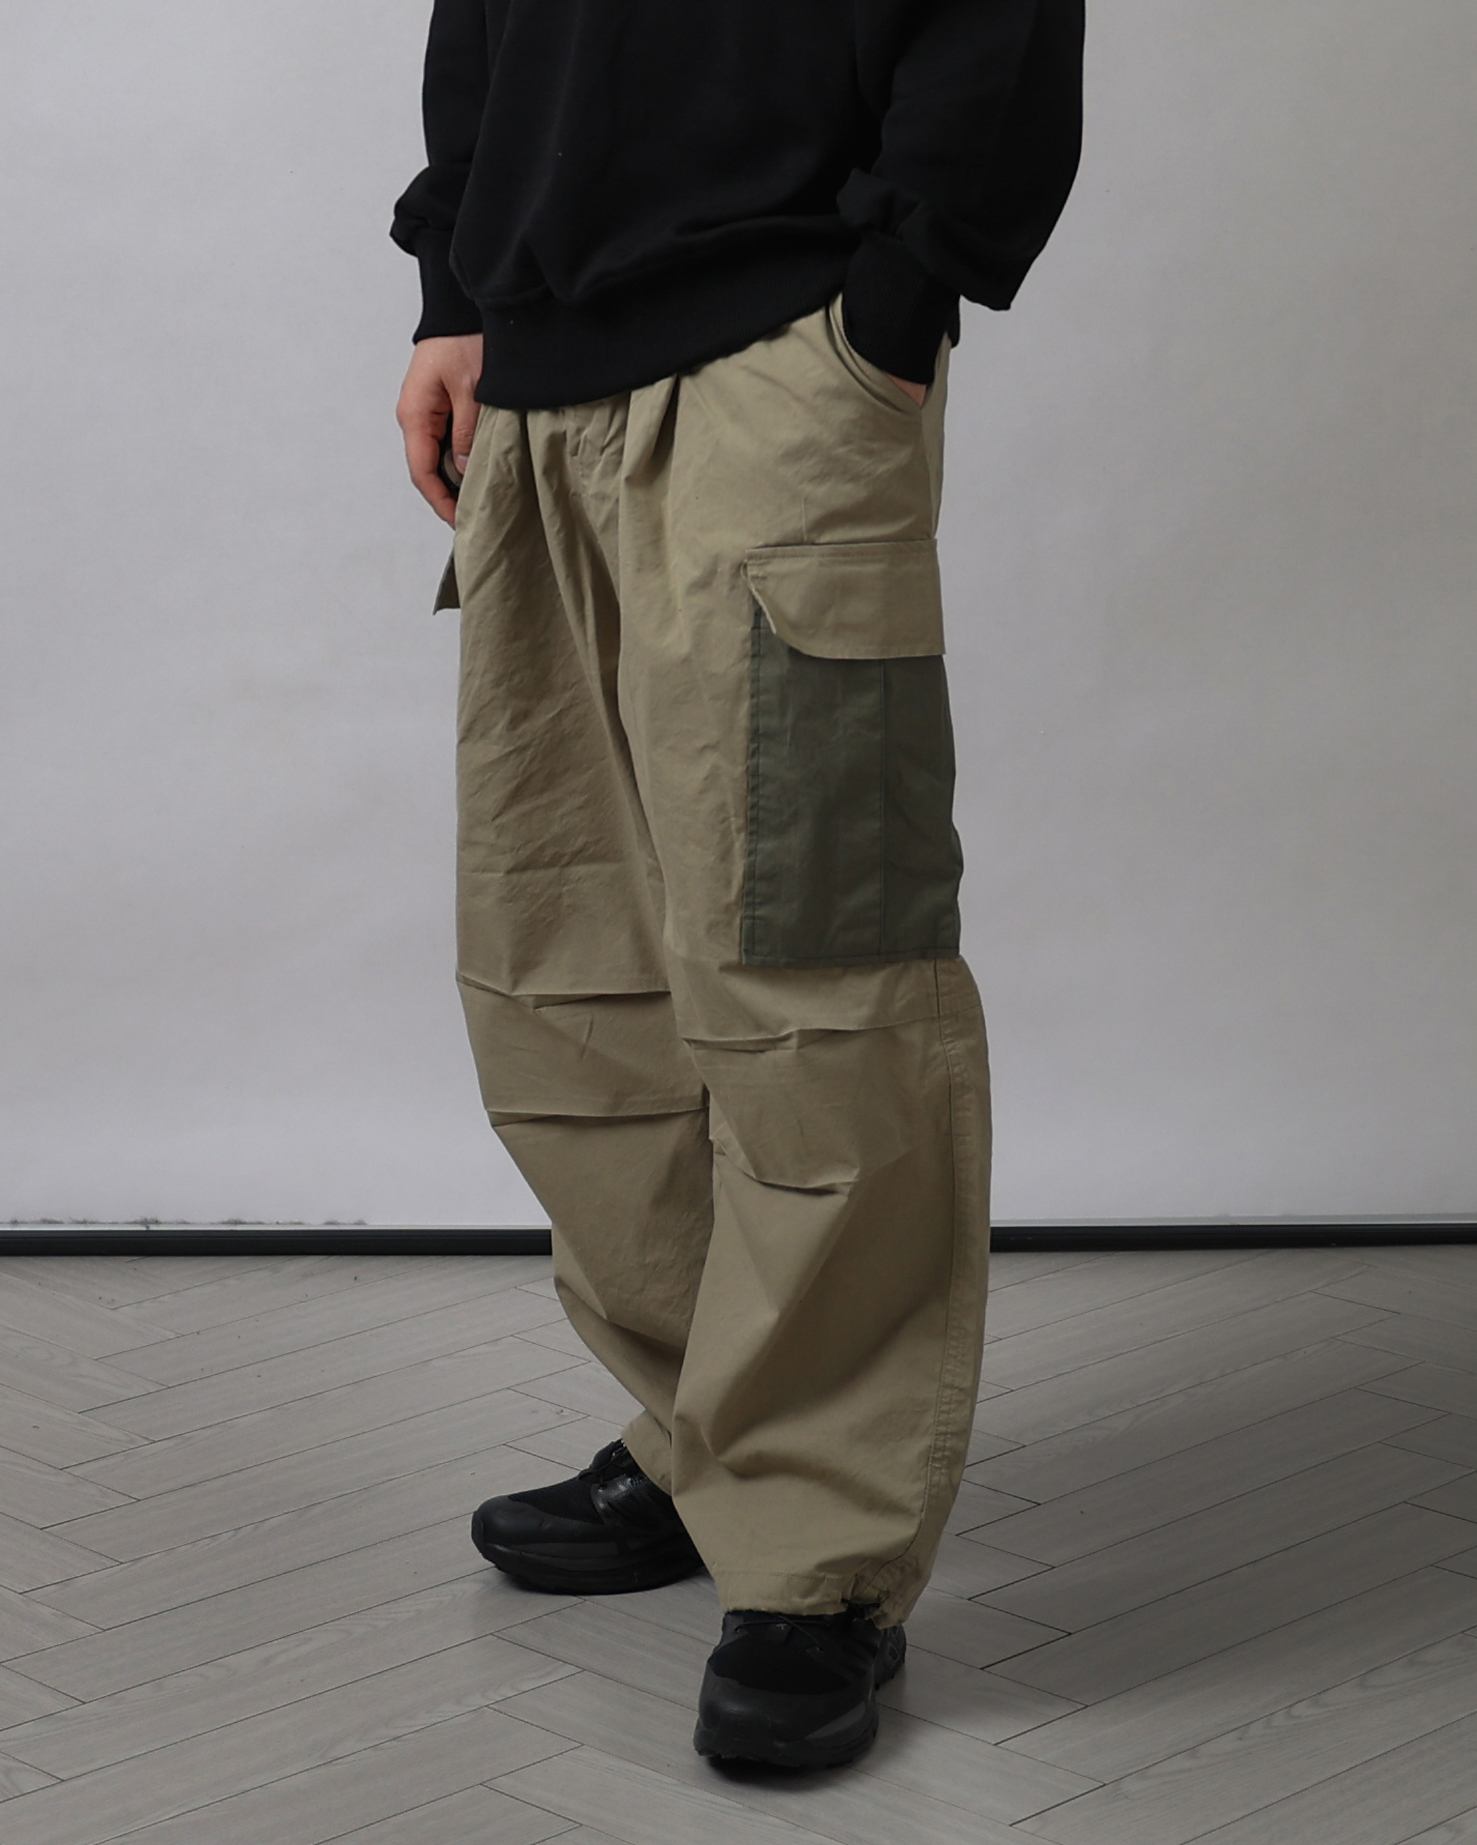 RARA Coloration Pocket Mil Field Pants (Khaki/Beige)